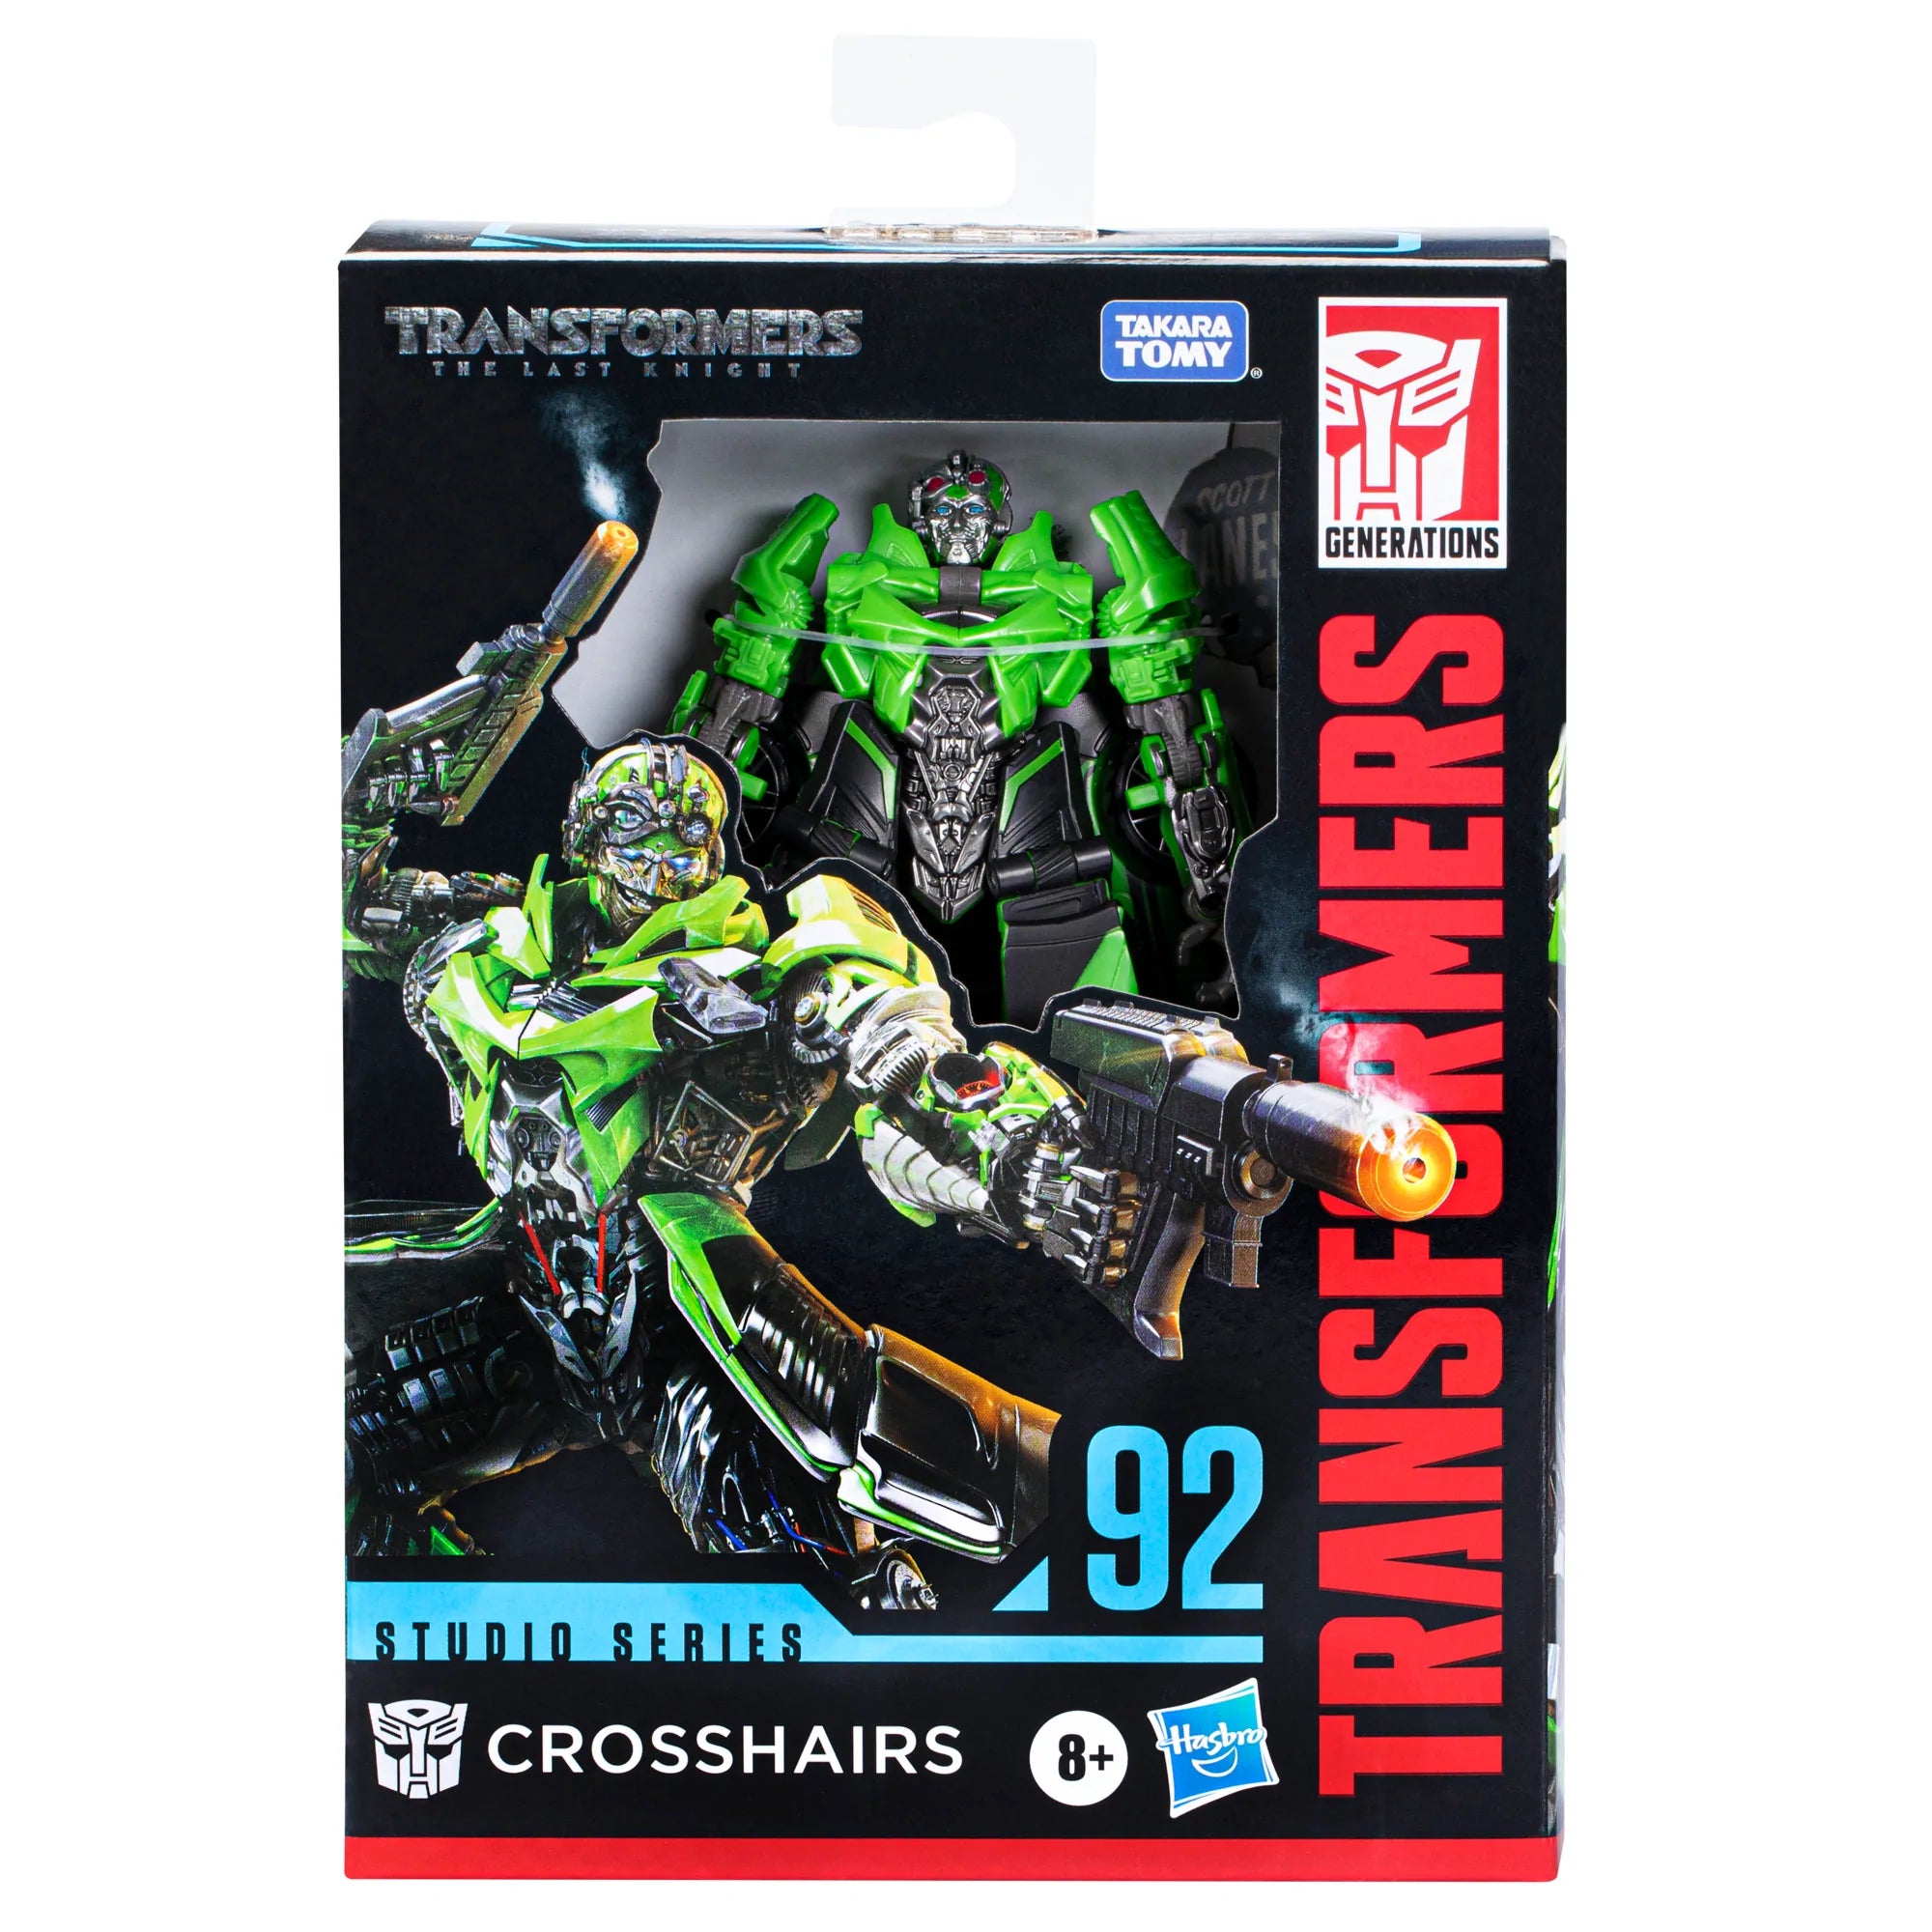 Hasbro - Transformers Generations -  Studio Series 92 - Transformers: The Last Knight - Crosshairs - Marvelous Toys